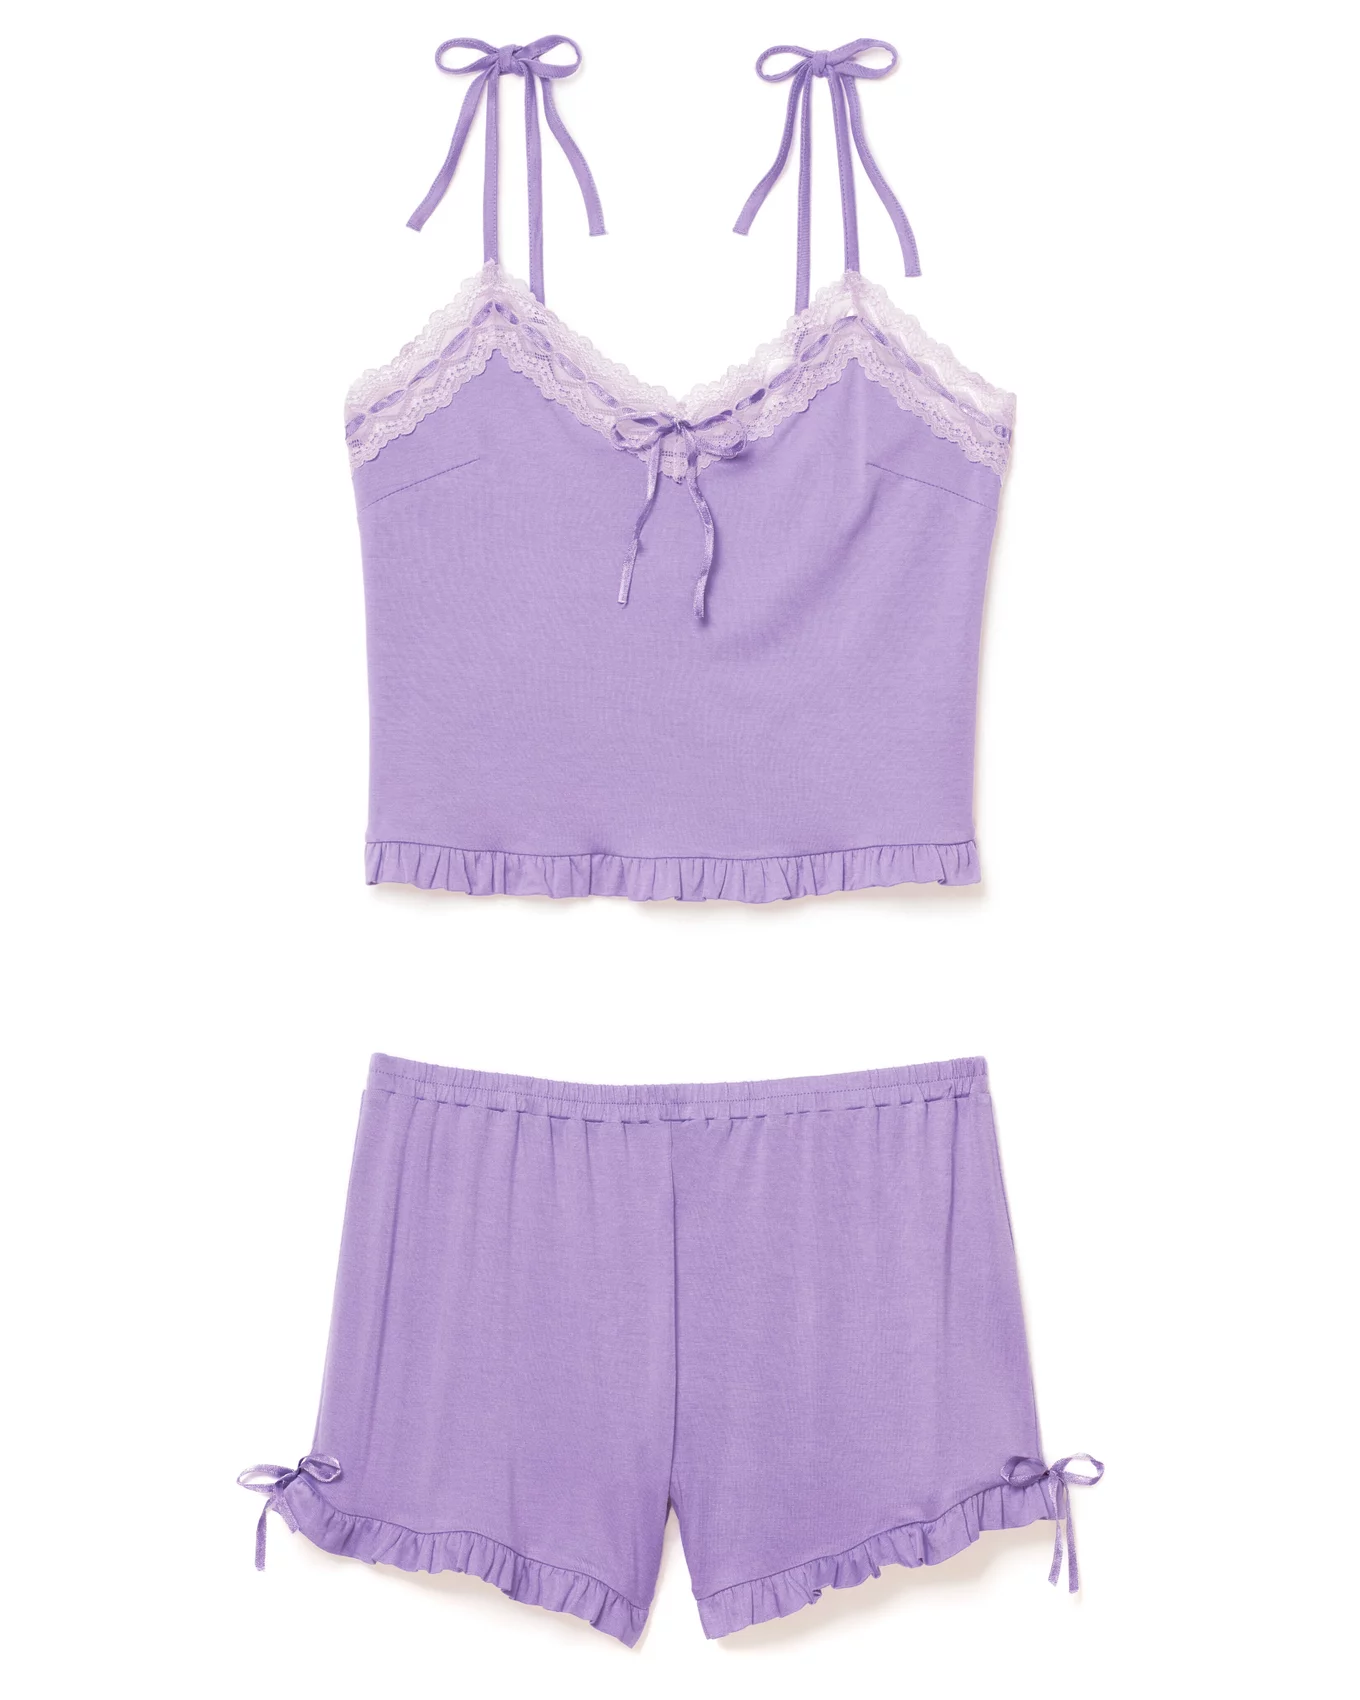 Isabella Medium Purple Cami and Short Set, XS-XL